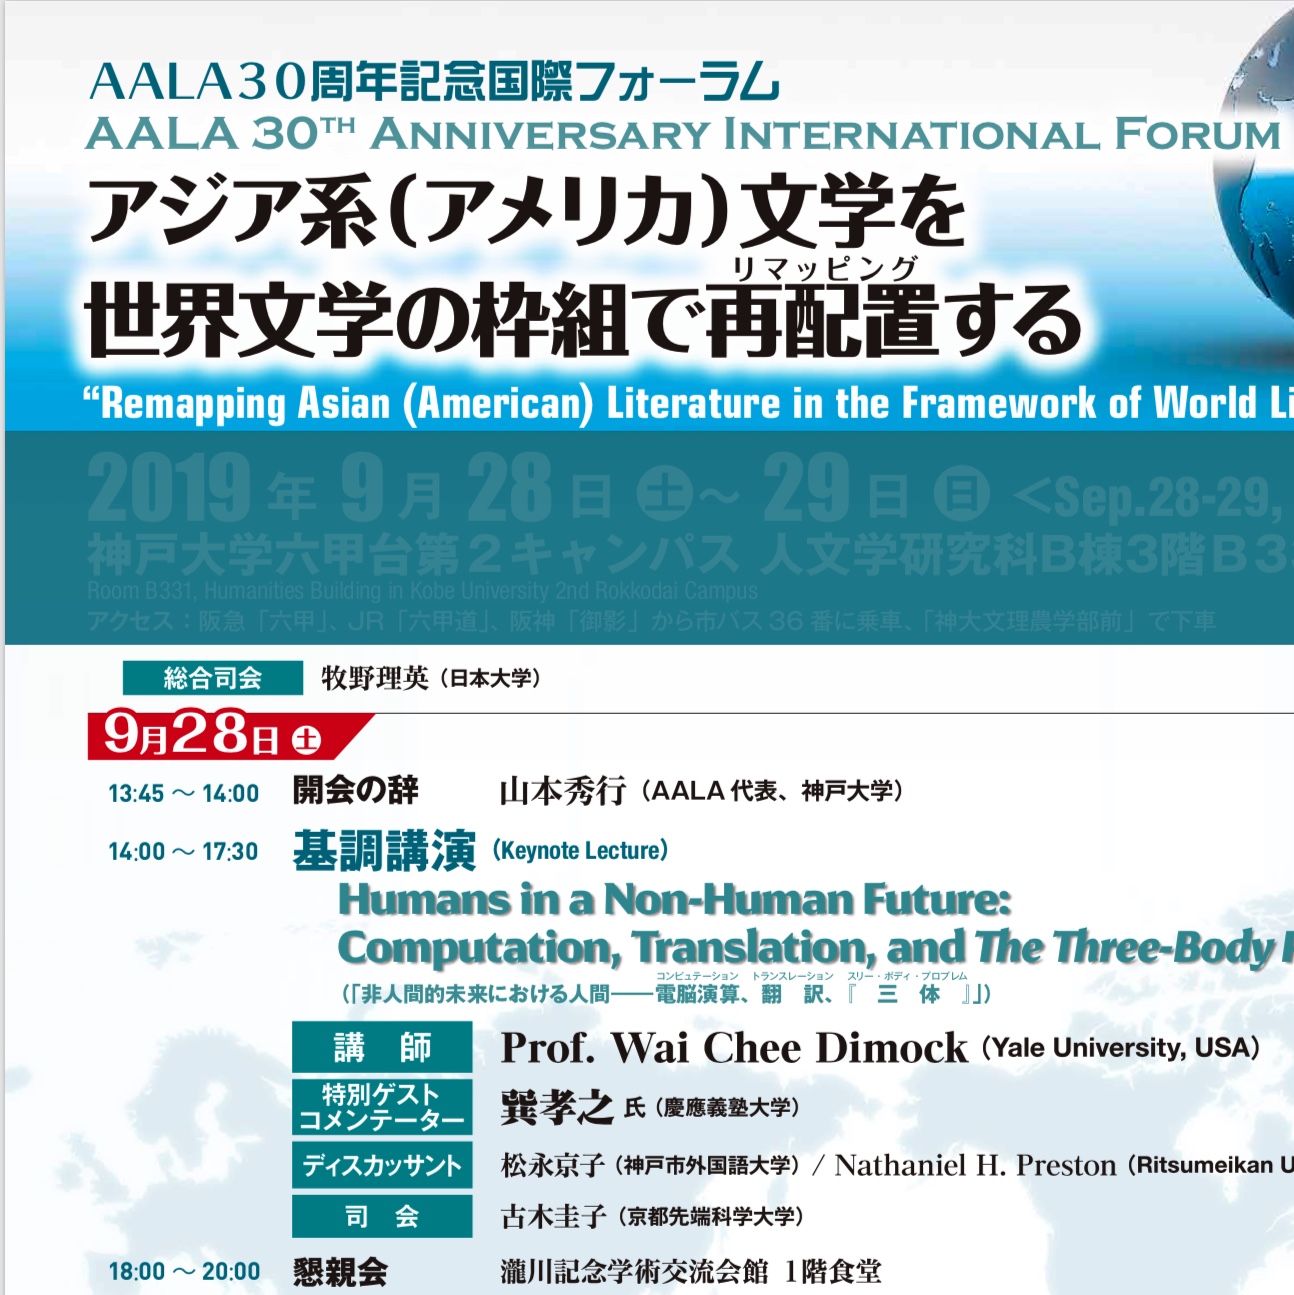 ＡＡＬＡ30周年記念国際フォーラム（AALA 30th Anniversary International Forum）開催のお知らせ